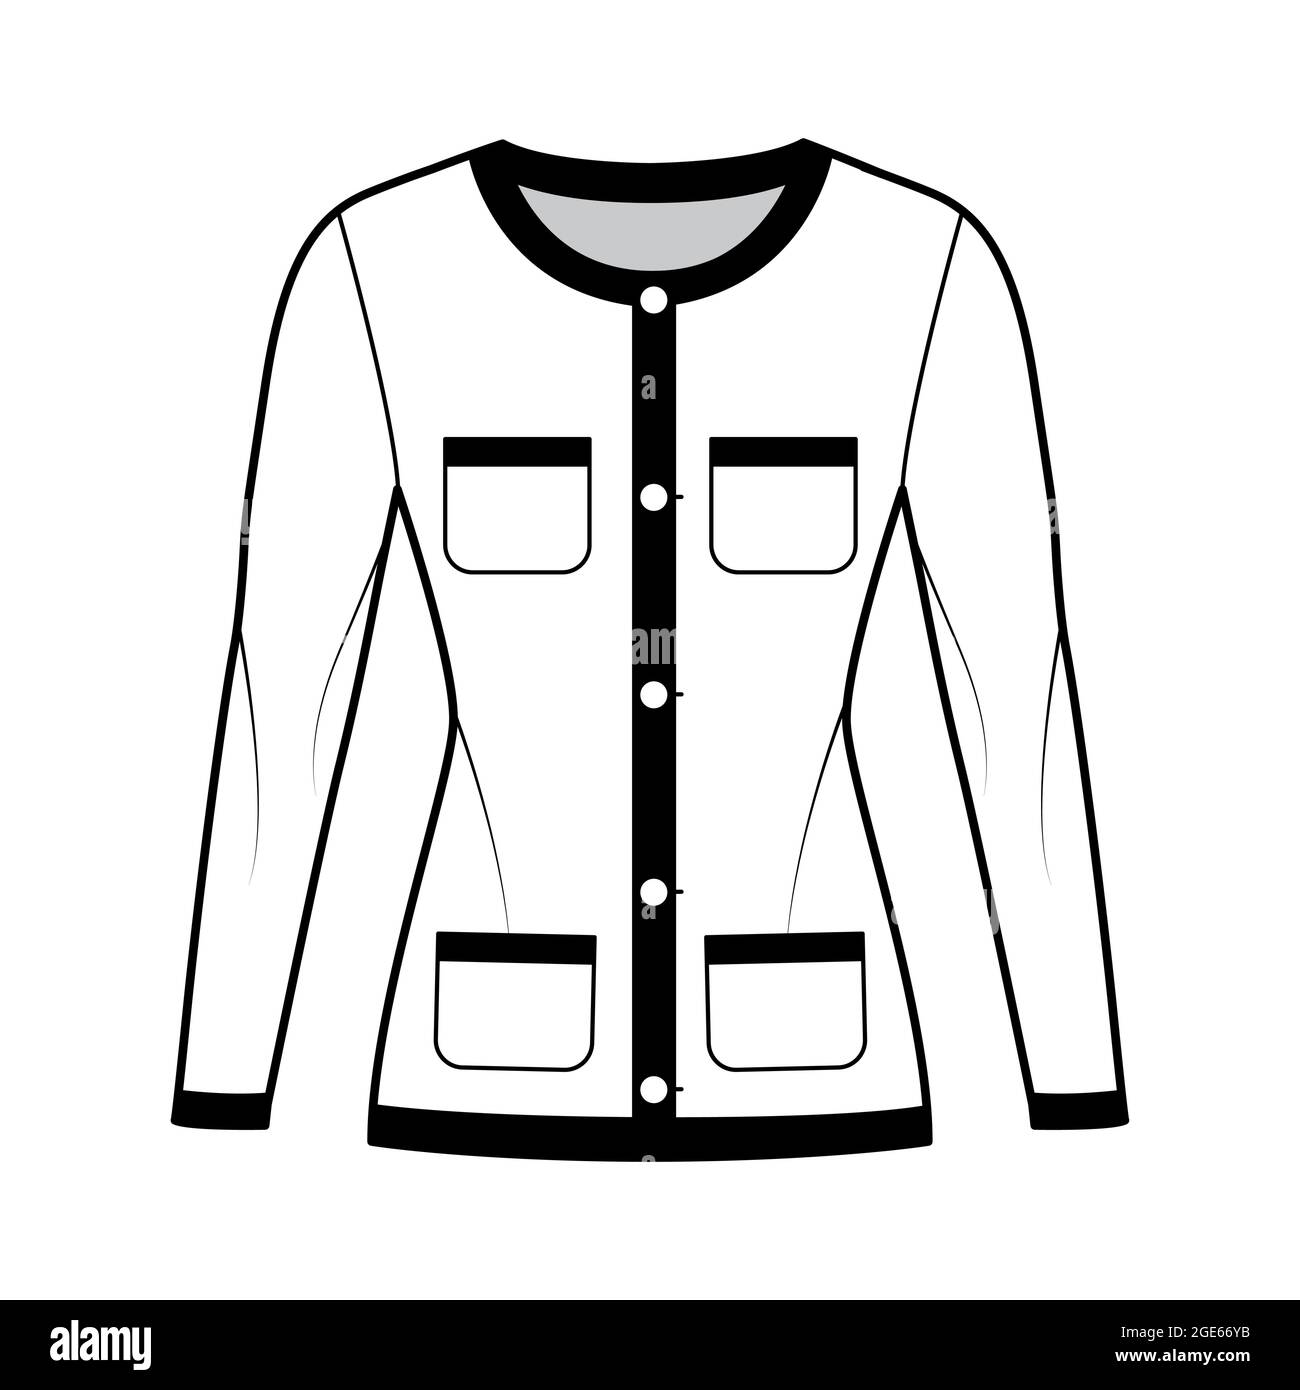 Blazer Jacket like Chanel suit technical fashion illustration with